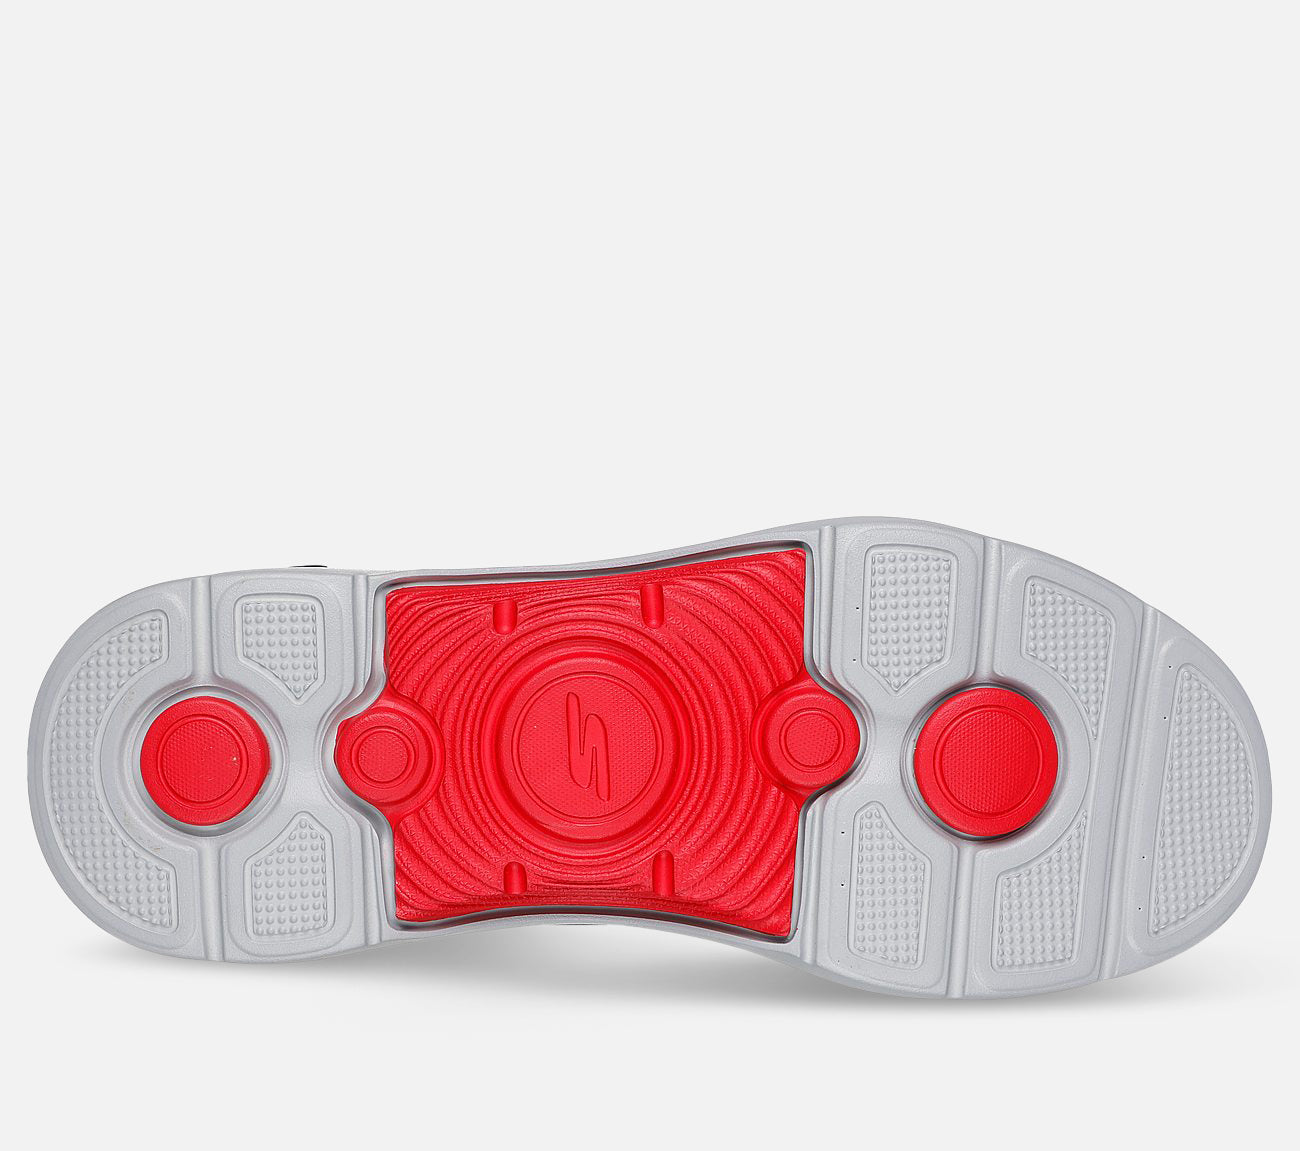 GO WALK Arch Fit 2.0 - Temporal Shoe Skechers